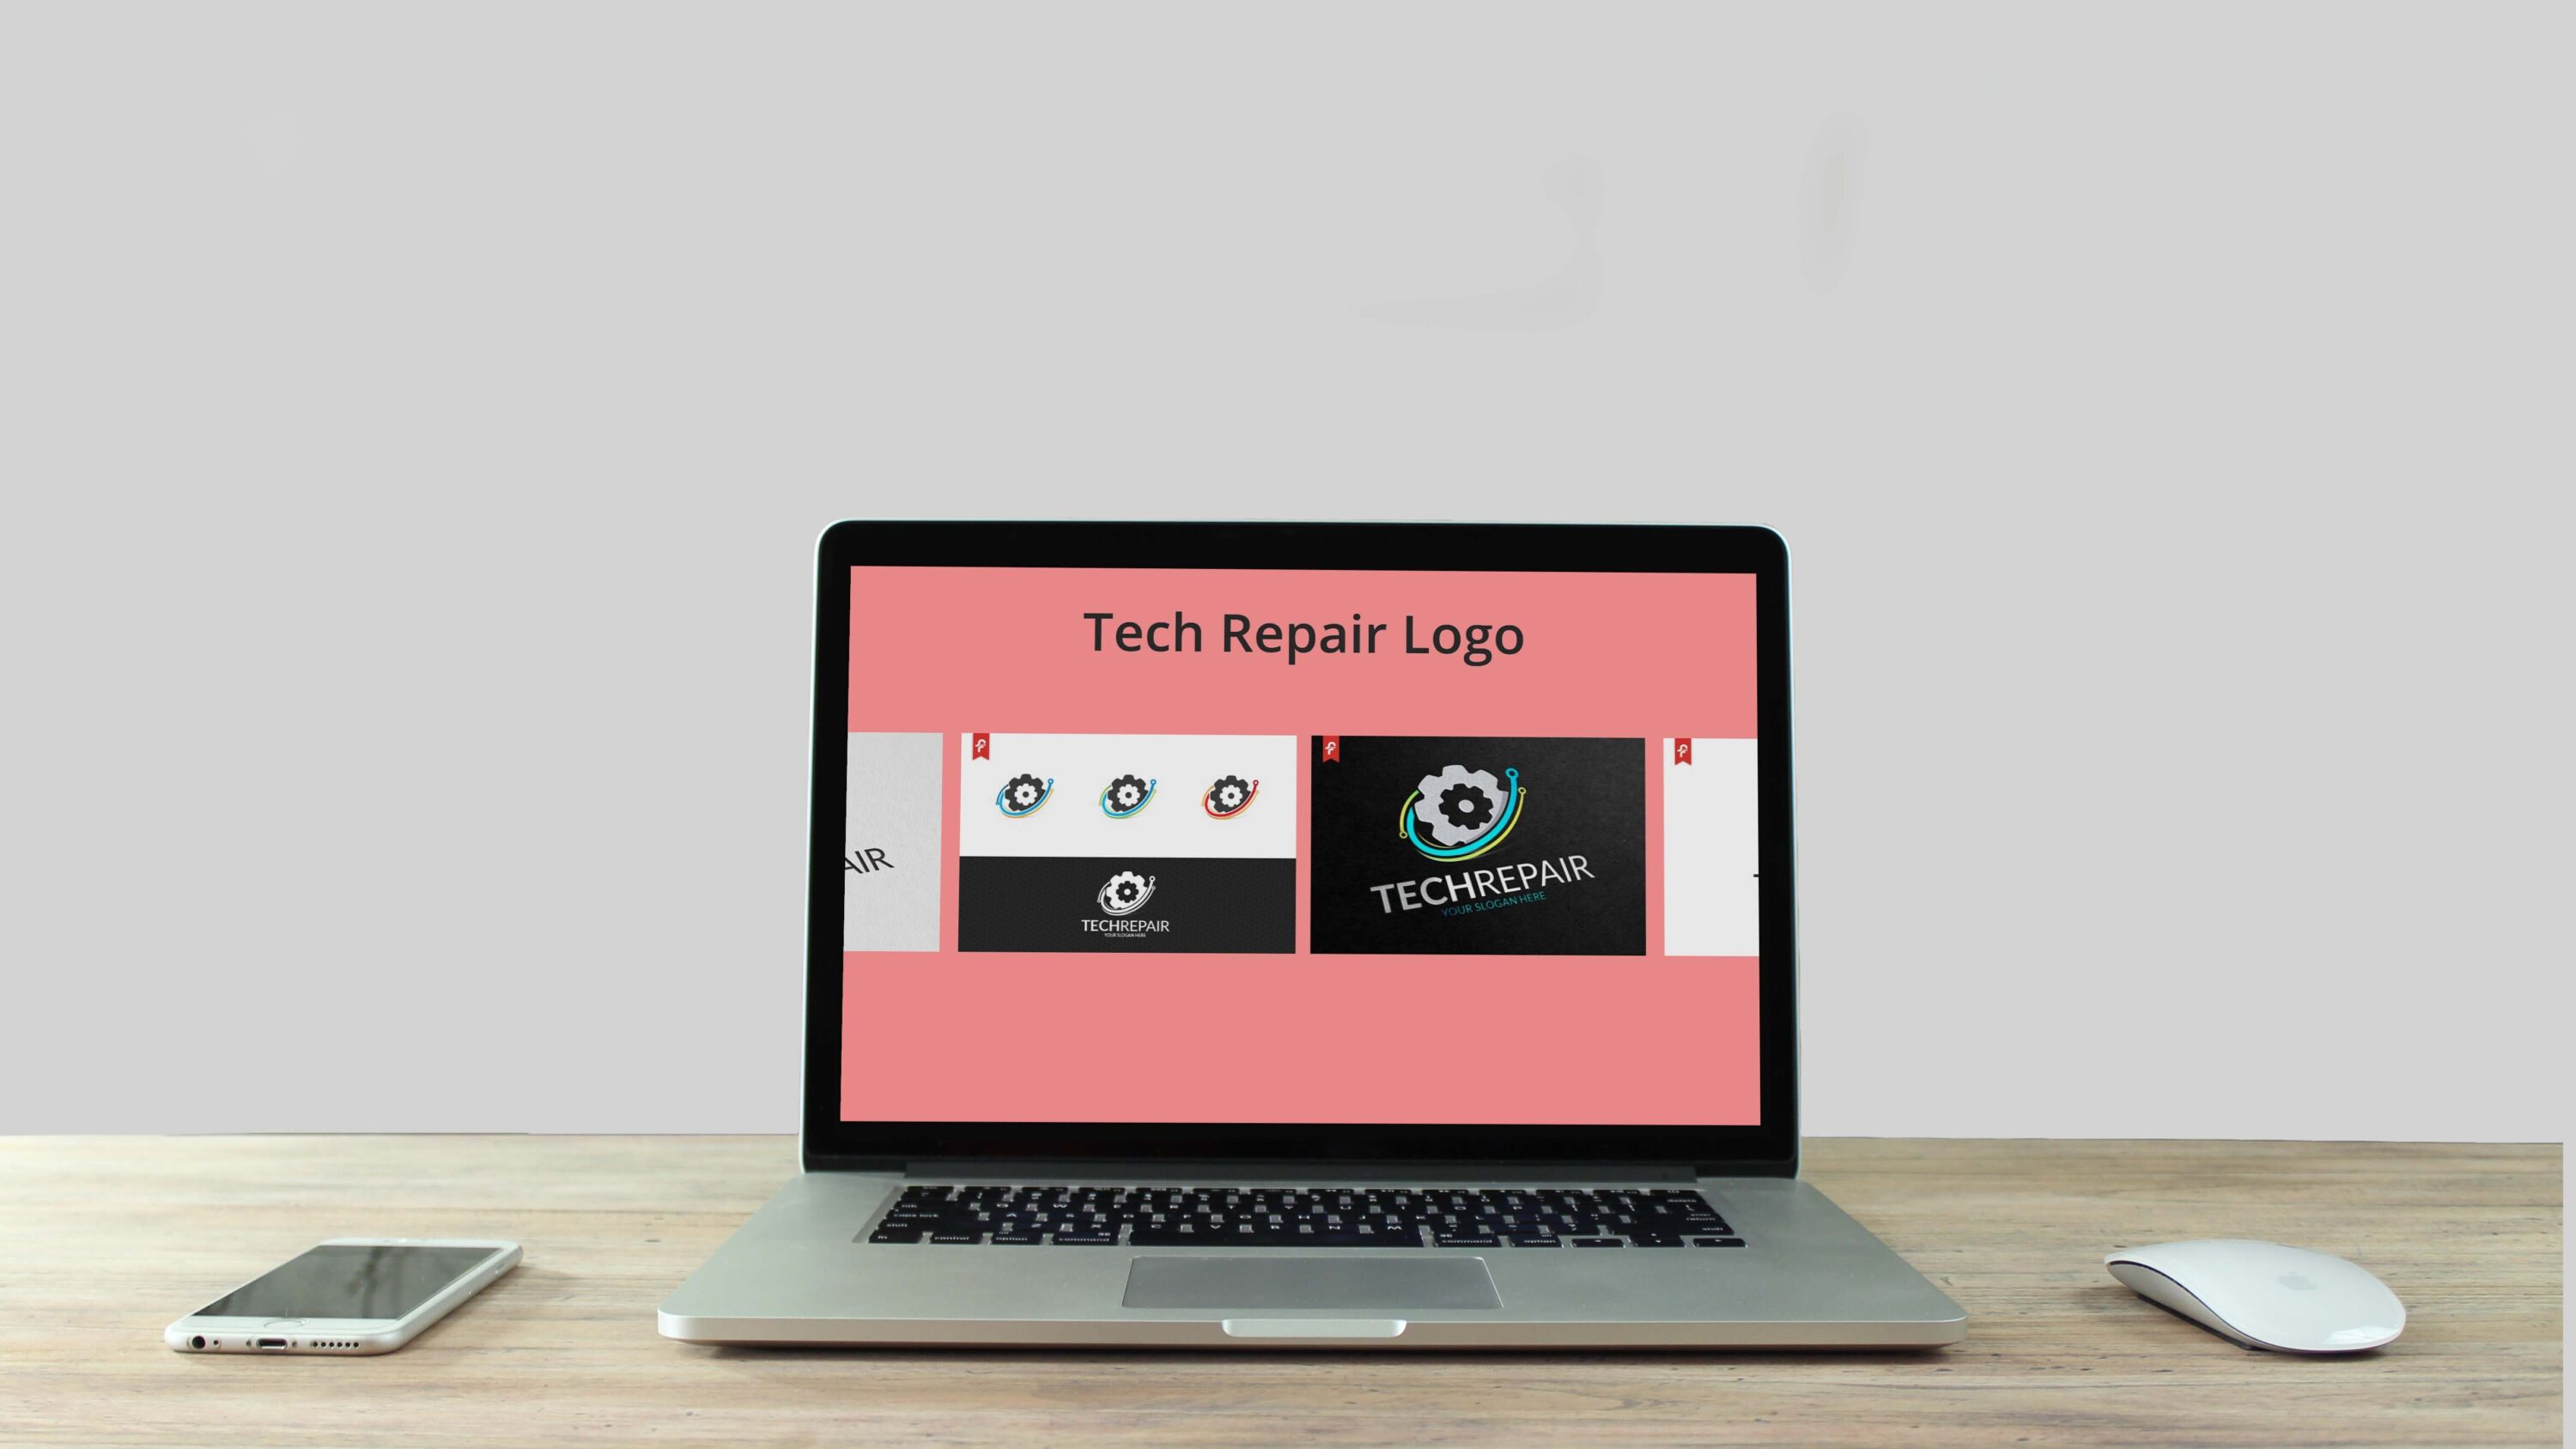 Tech Repair Logo laptop preview.